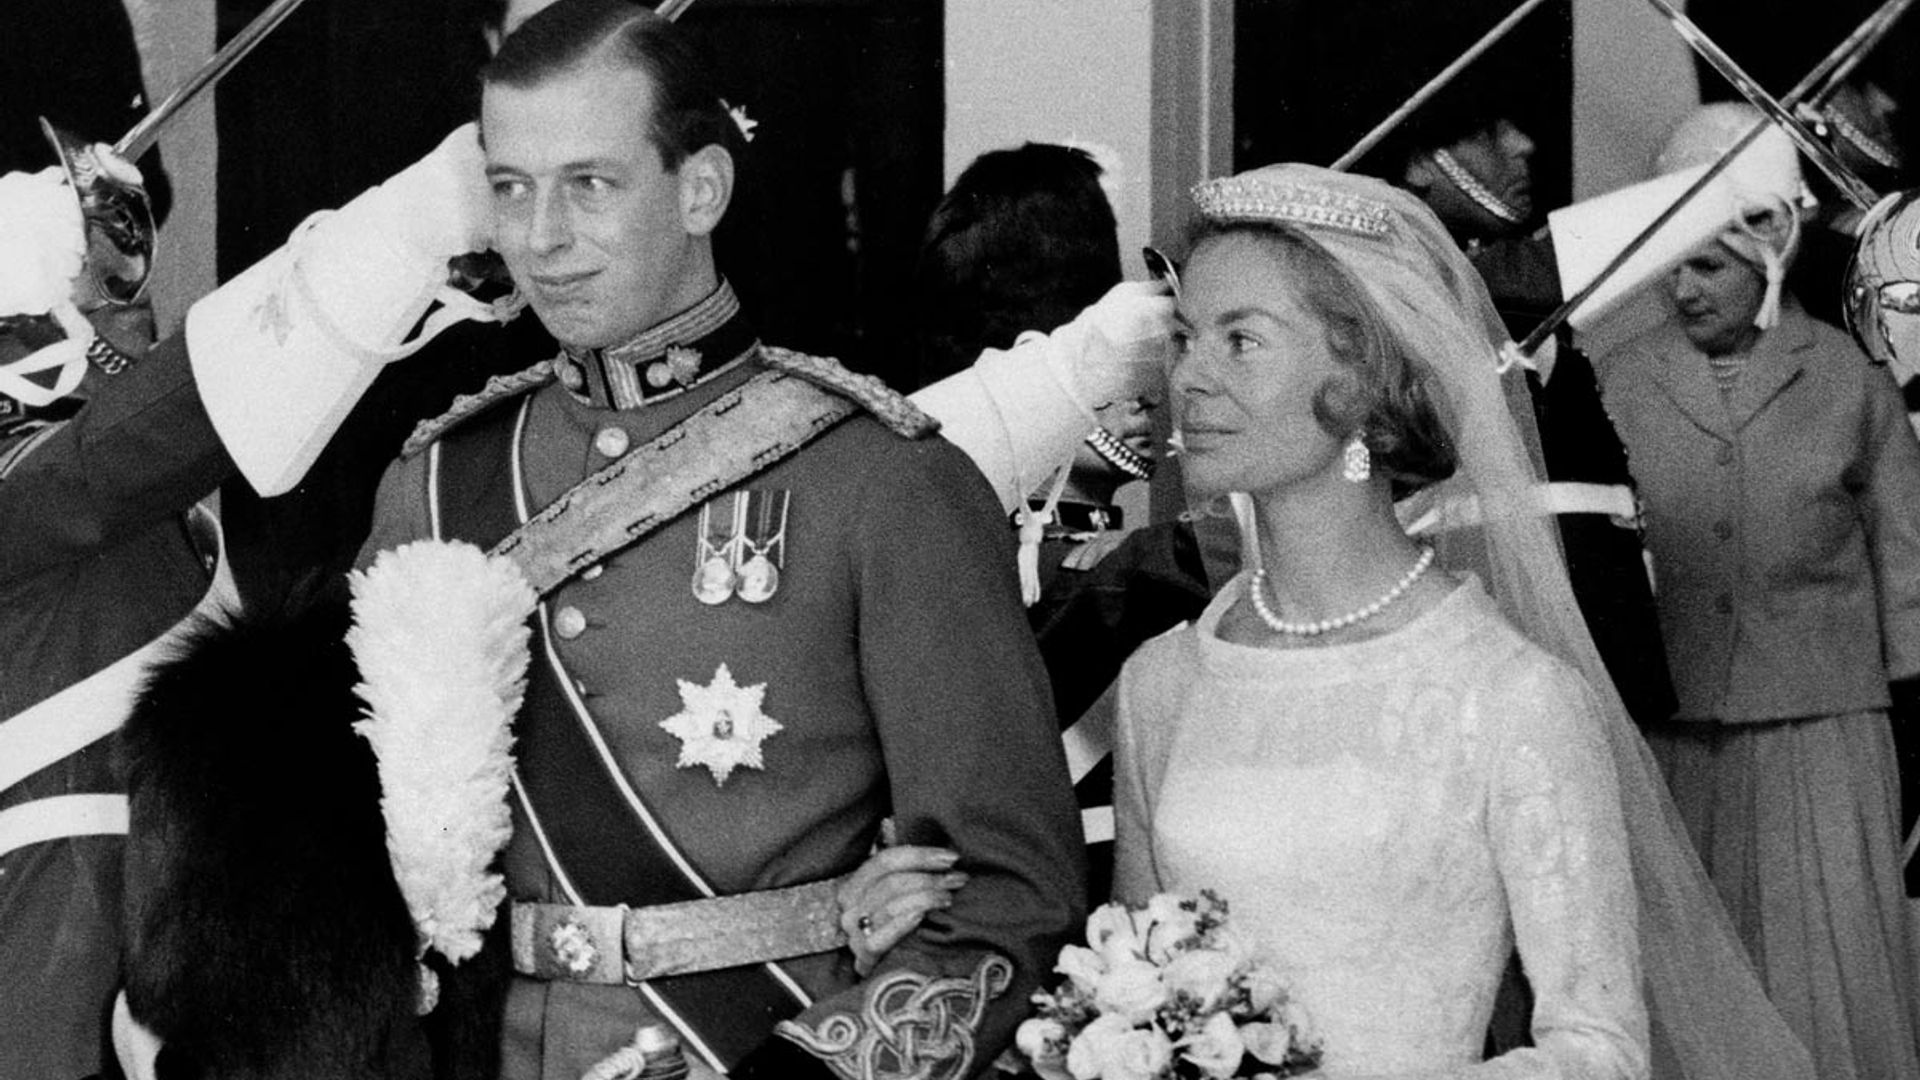 Duchess of Kent's wedding dress concerns revealed